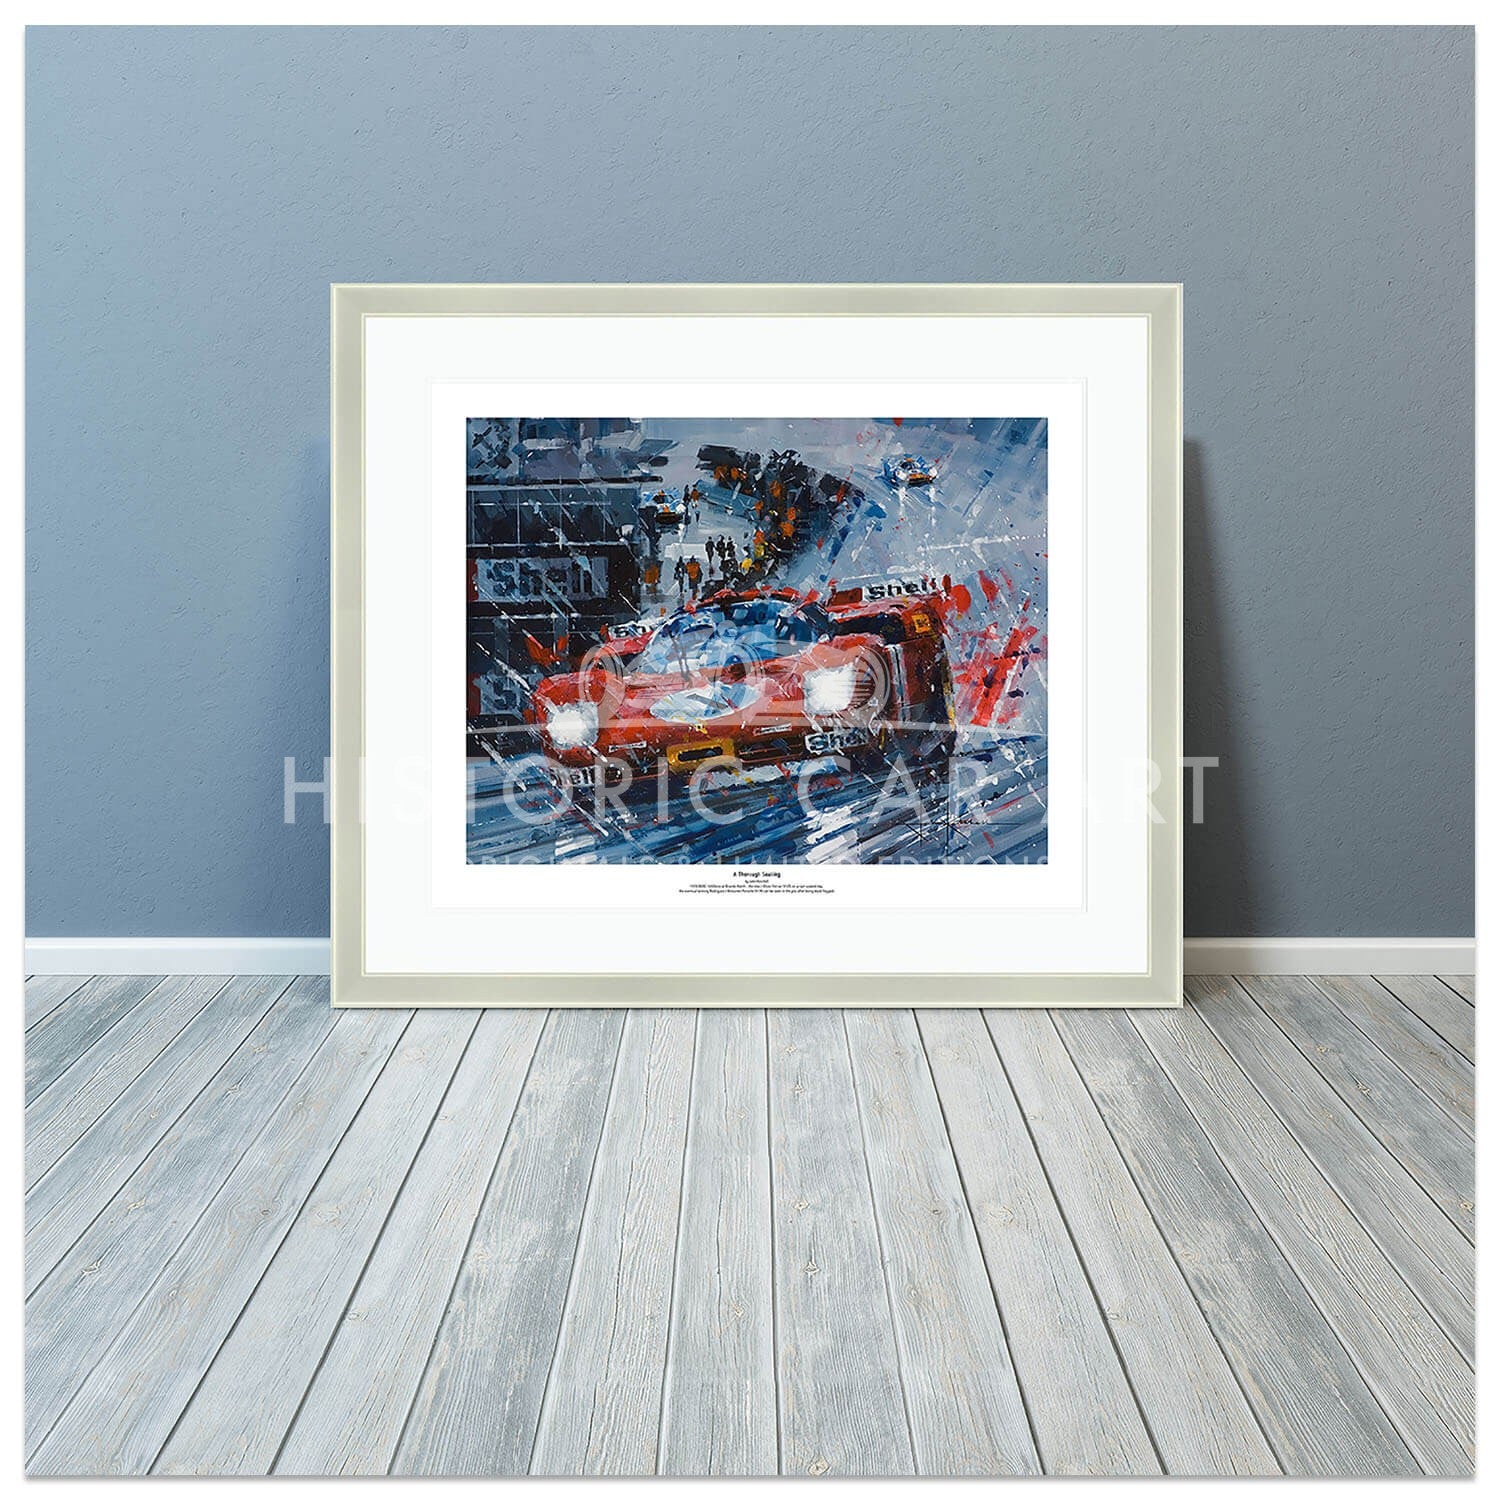 A Thorough Soaking | Ickx & Oliver | Ferrari | Print